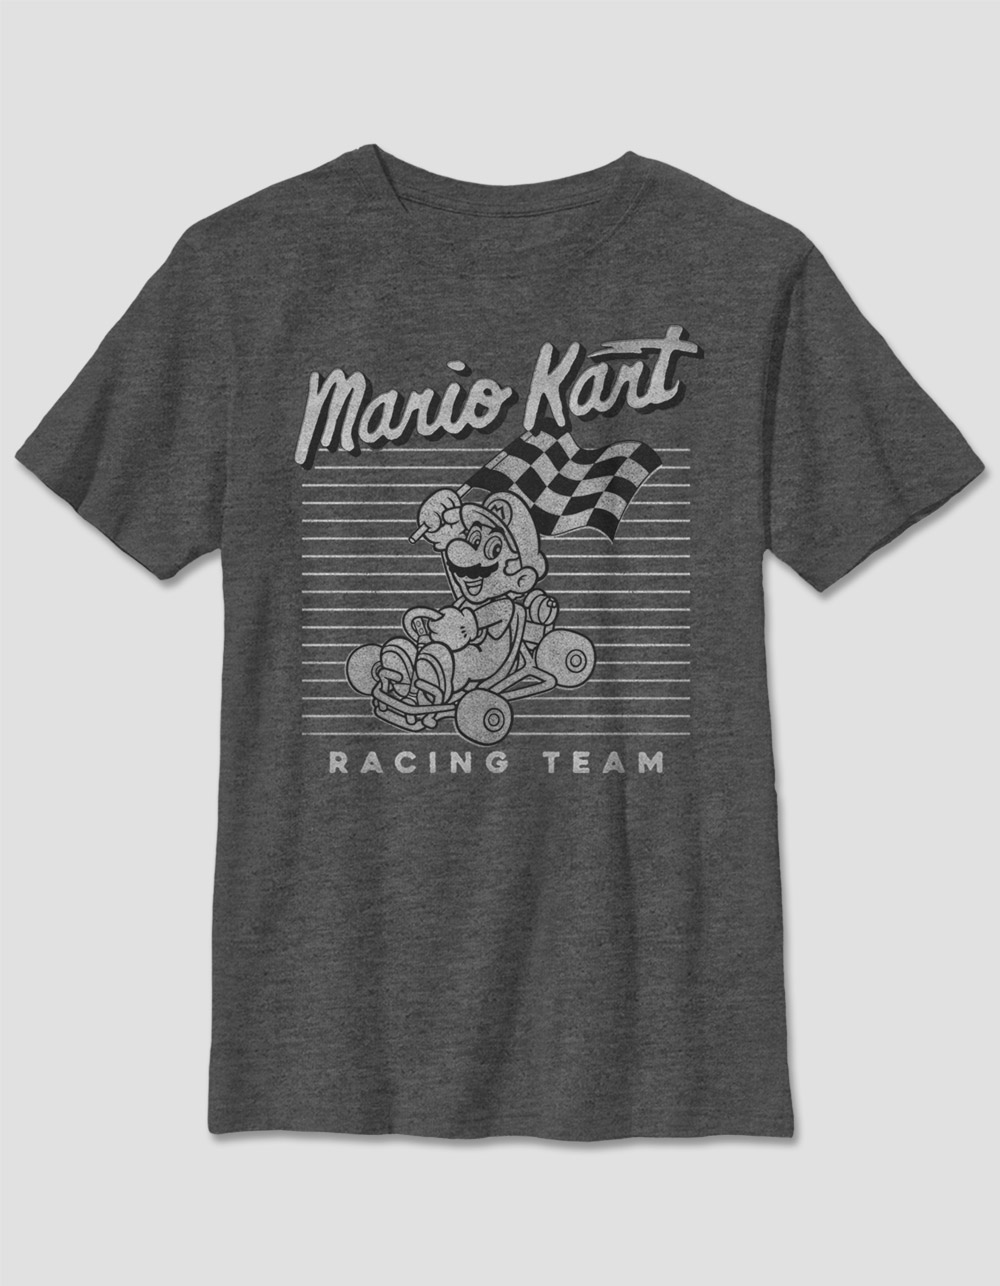 MARIO Kart Racing Team Unisex Kids Tee